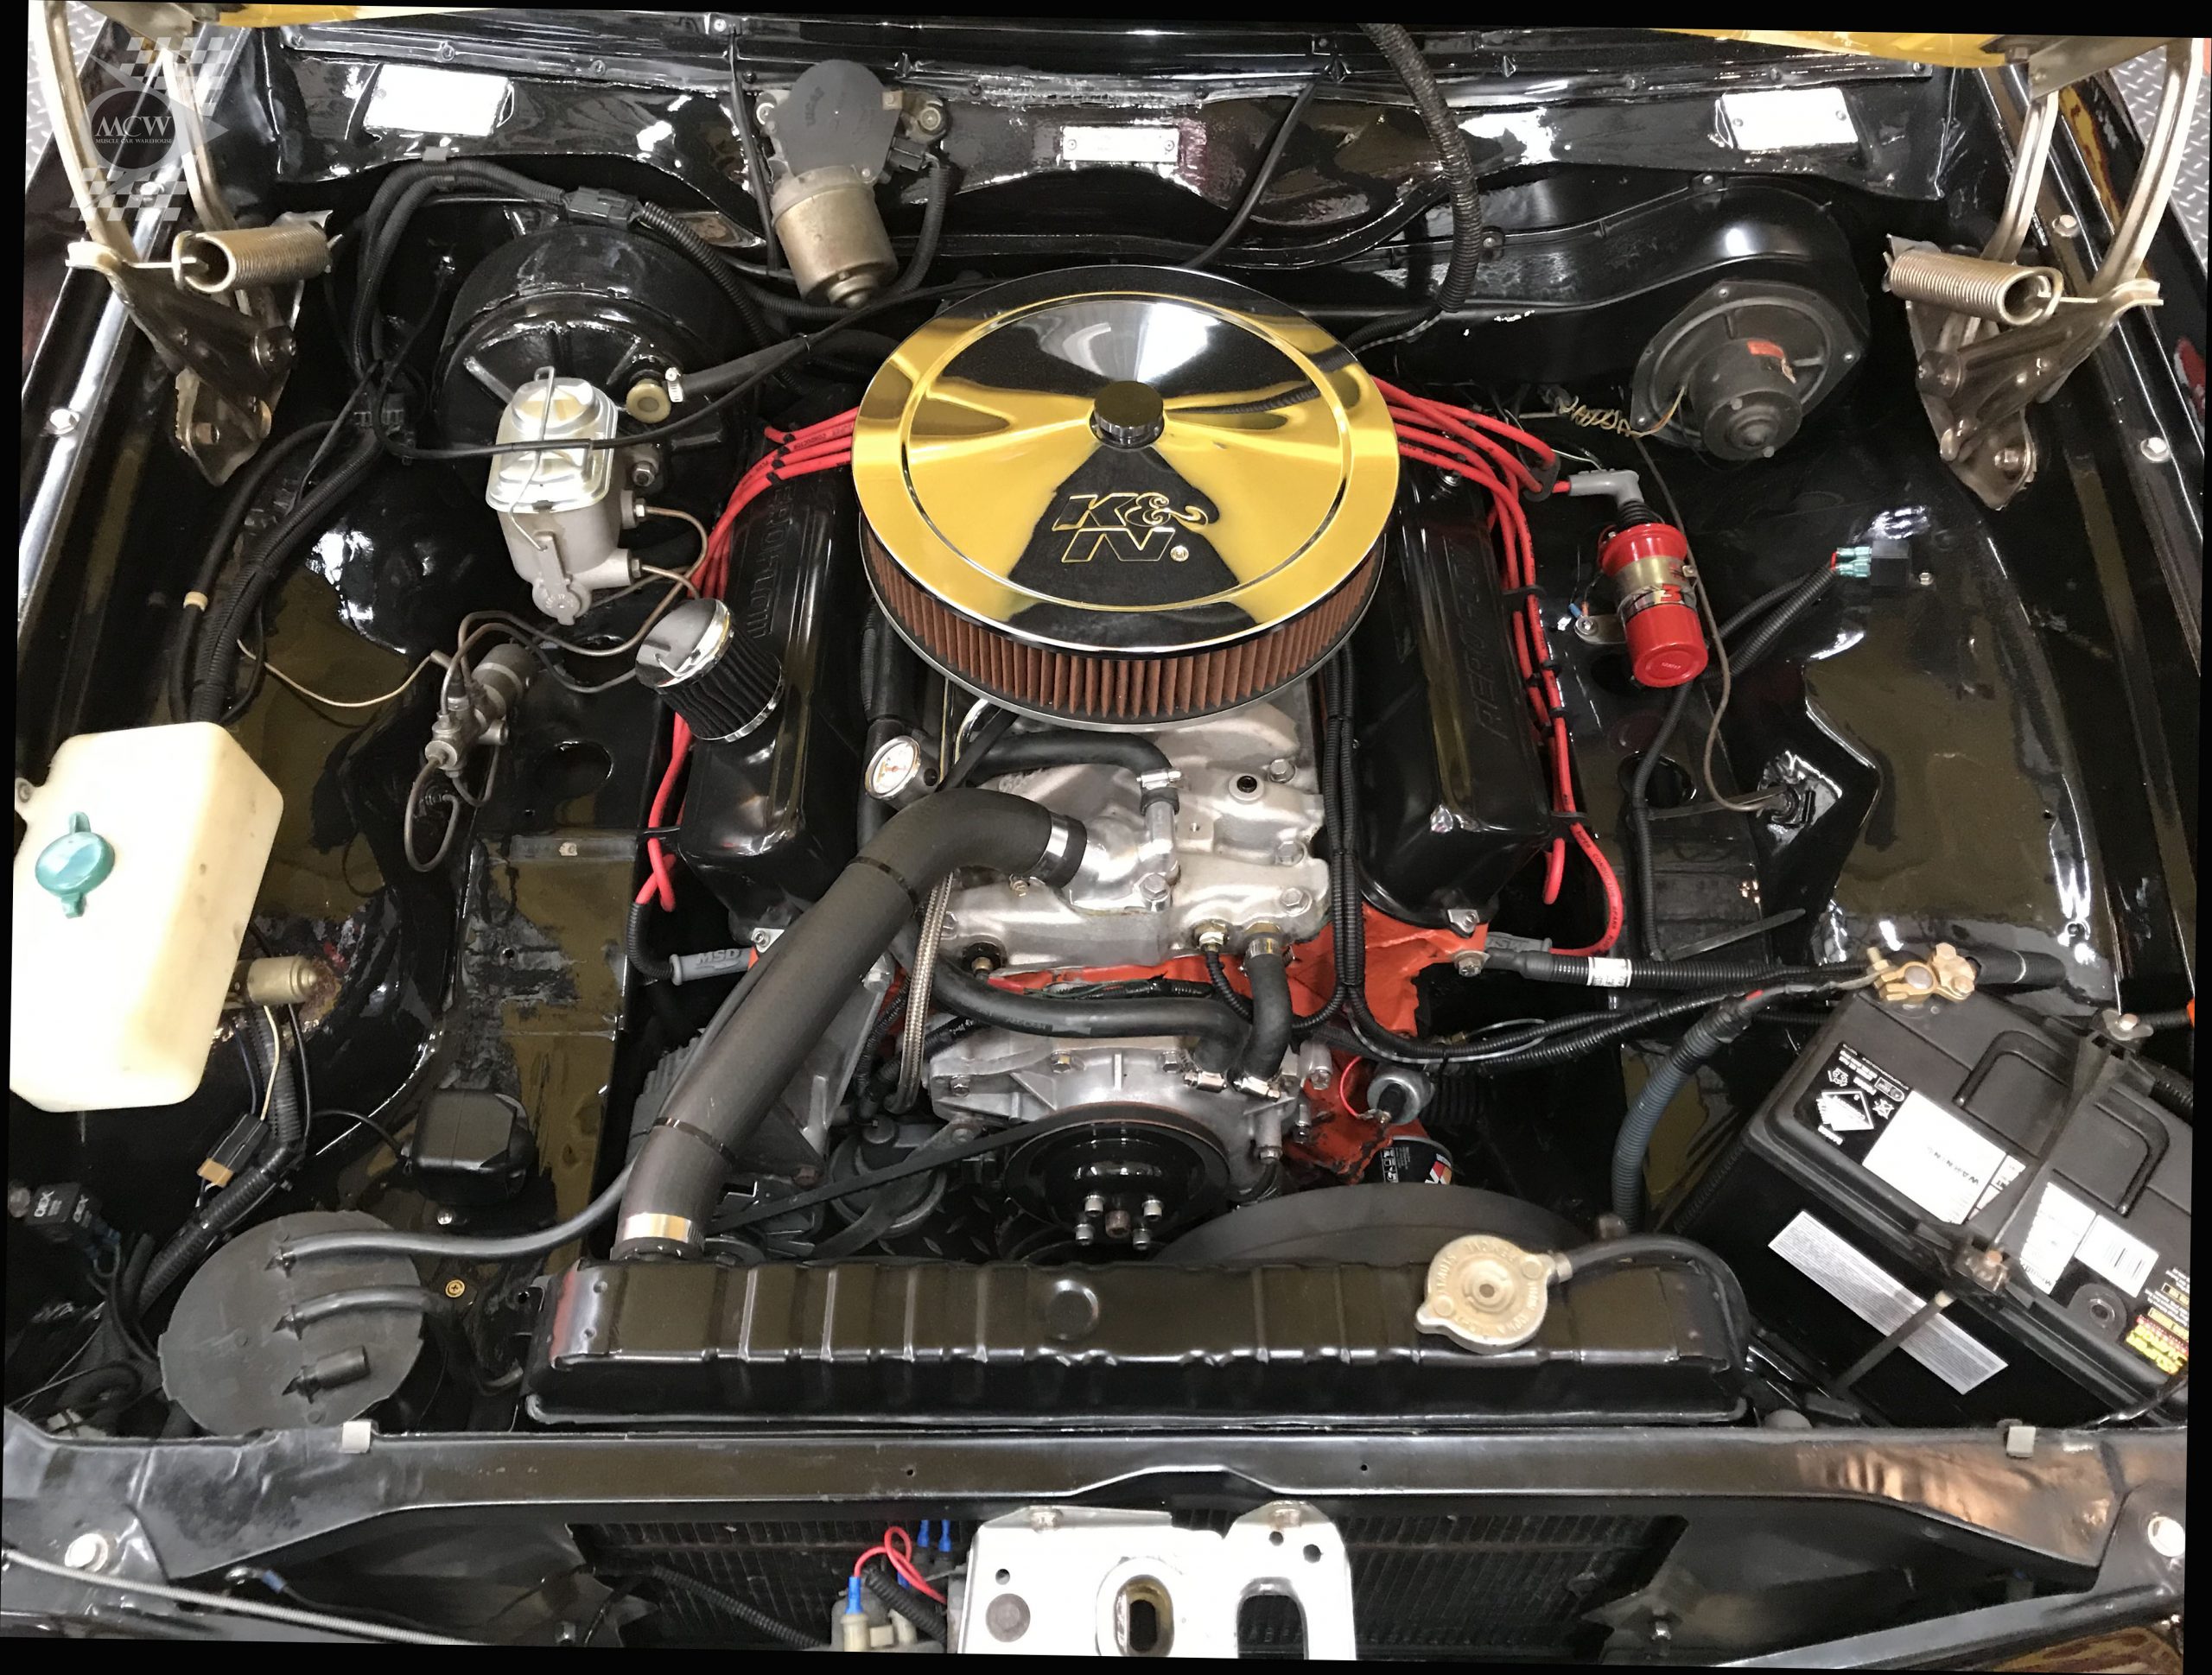 Holden Torana A9X Replica Engine | Muscle Car Warehouse